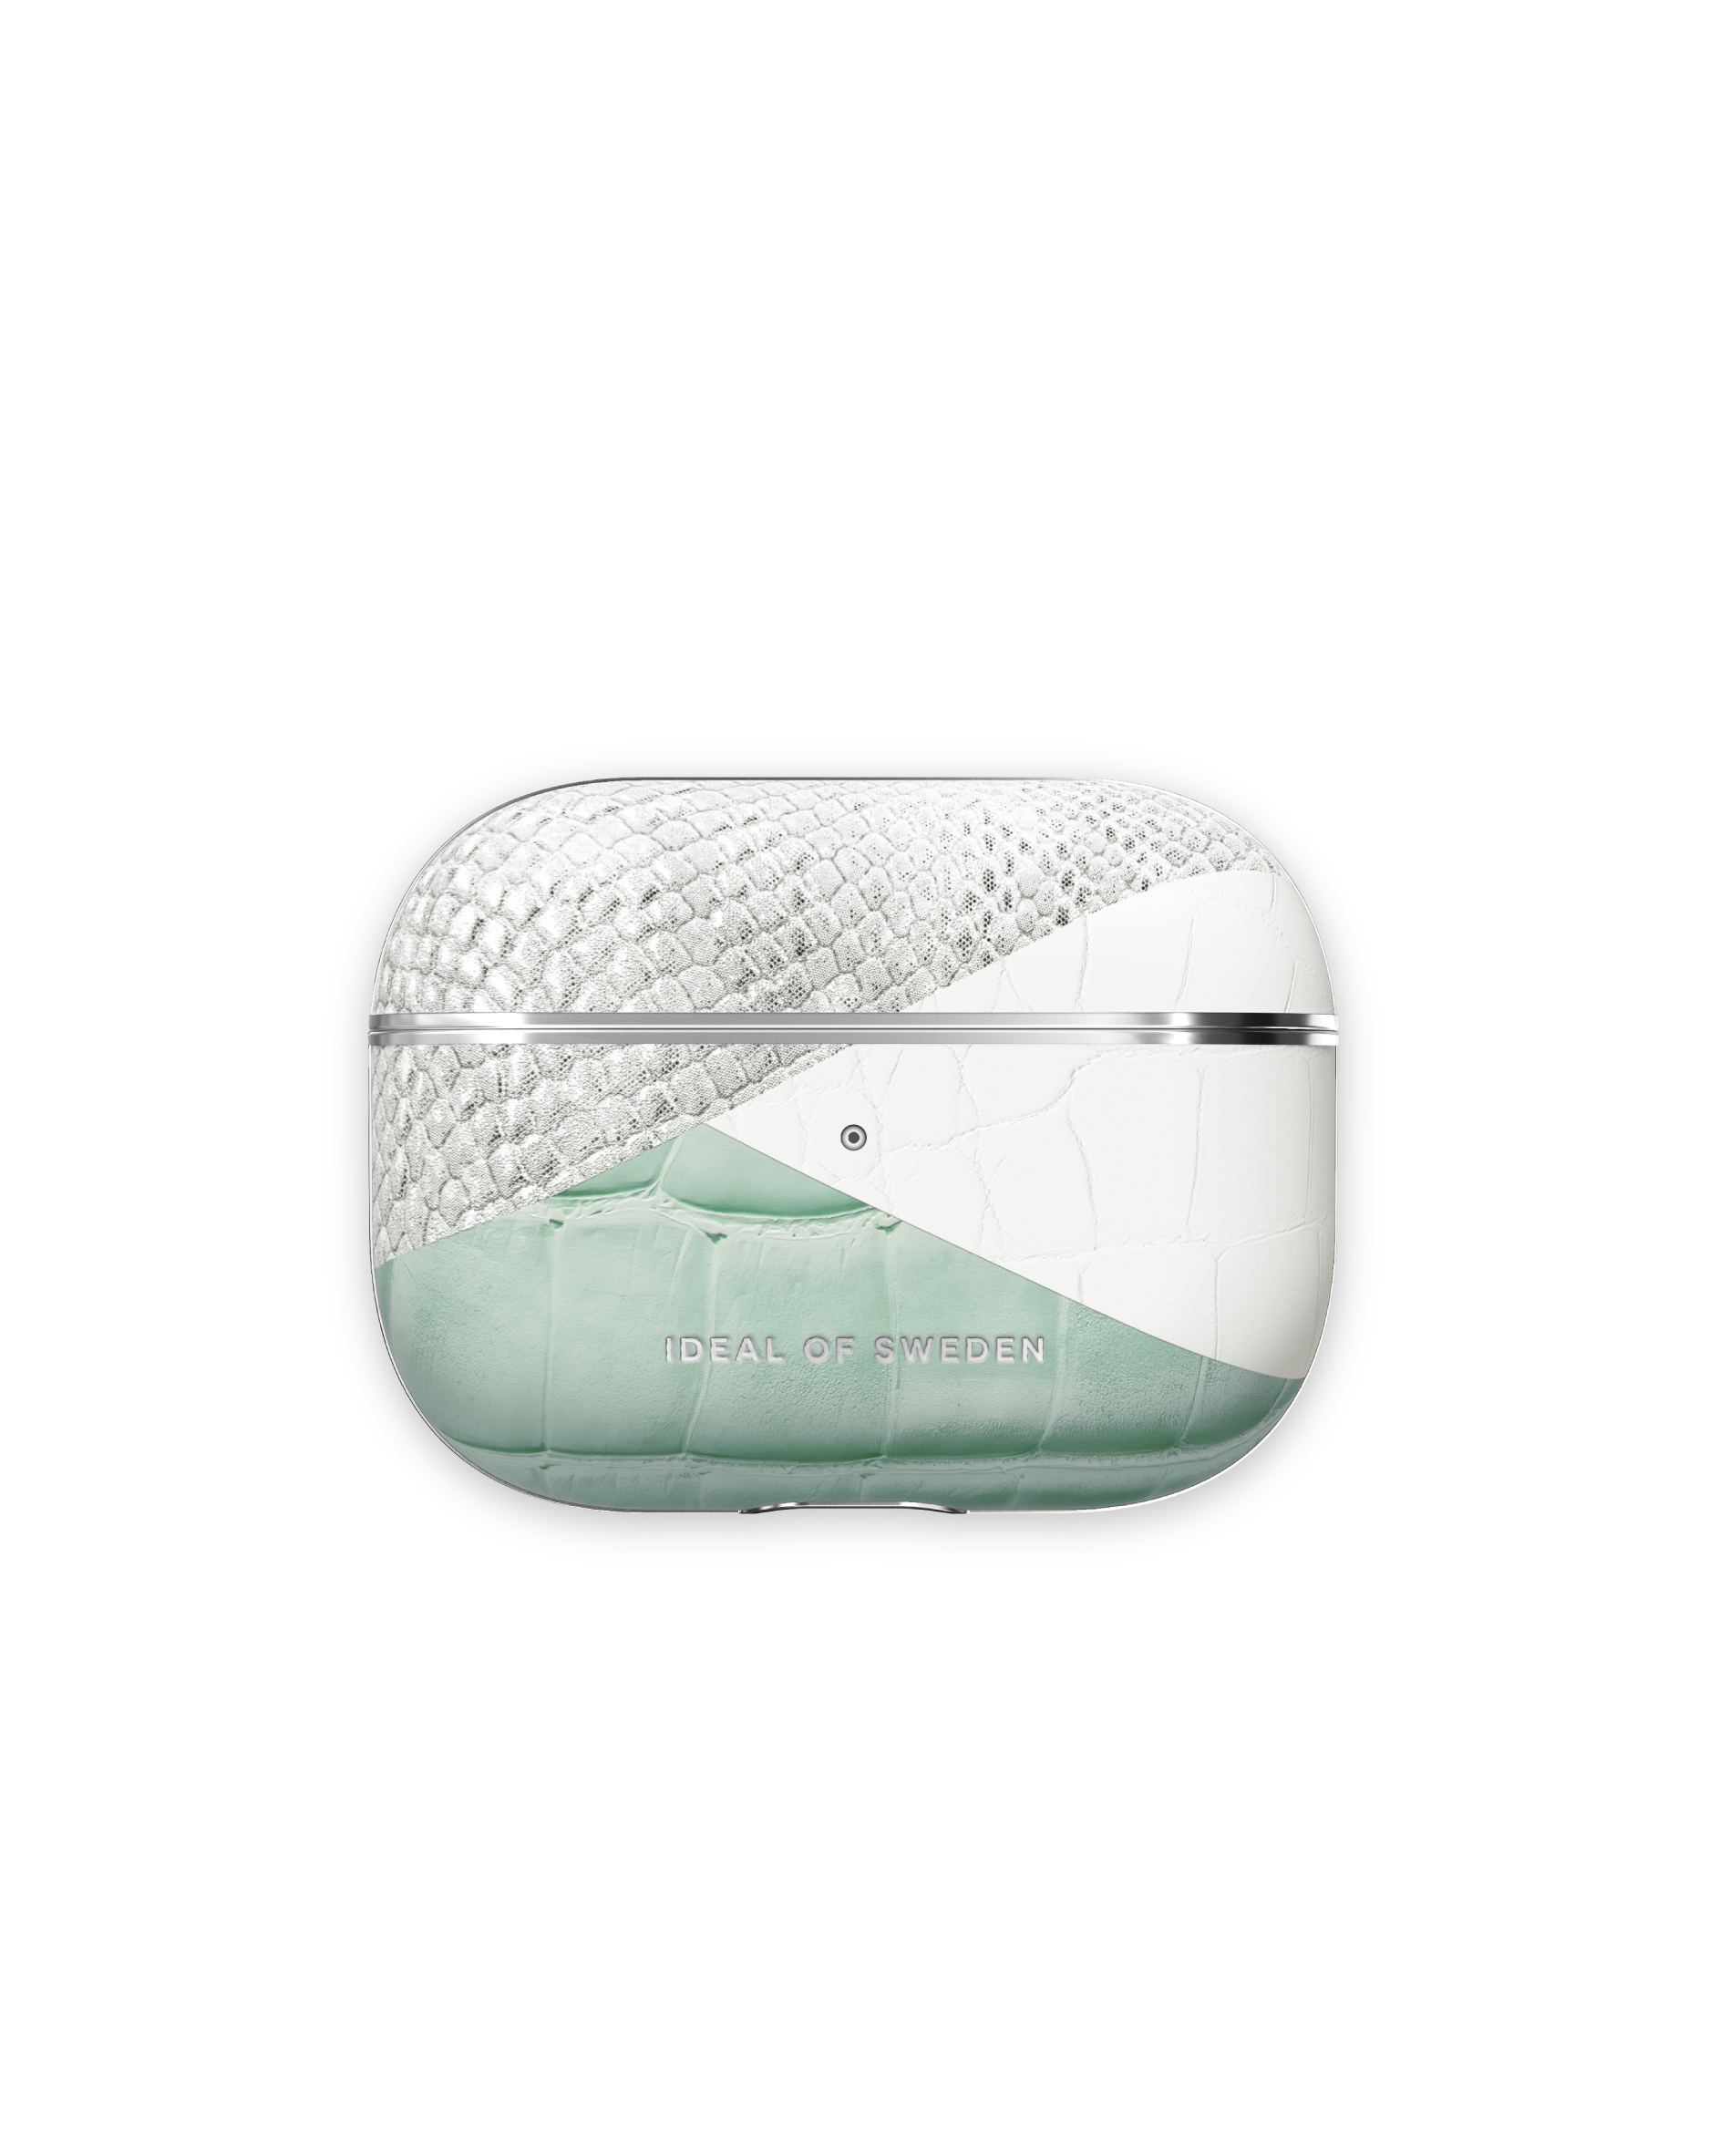 Mint passend für: Palladian AirPod Case Snake Apple OF Full SWEDEN IDAPCSS21-PRO-268 Cover IDEAL